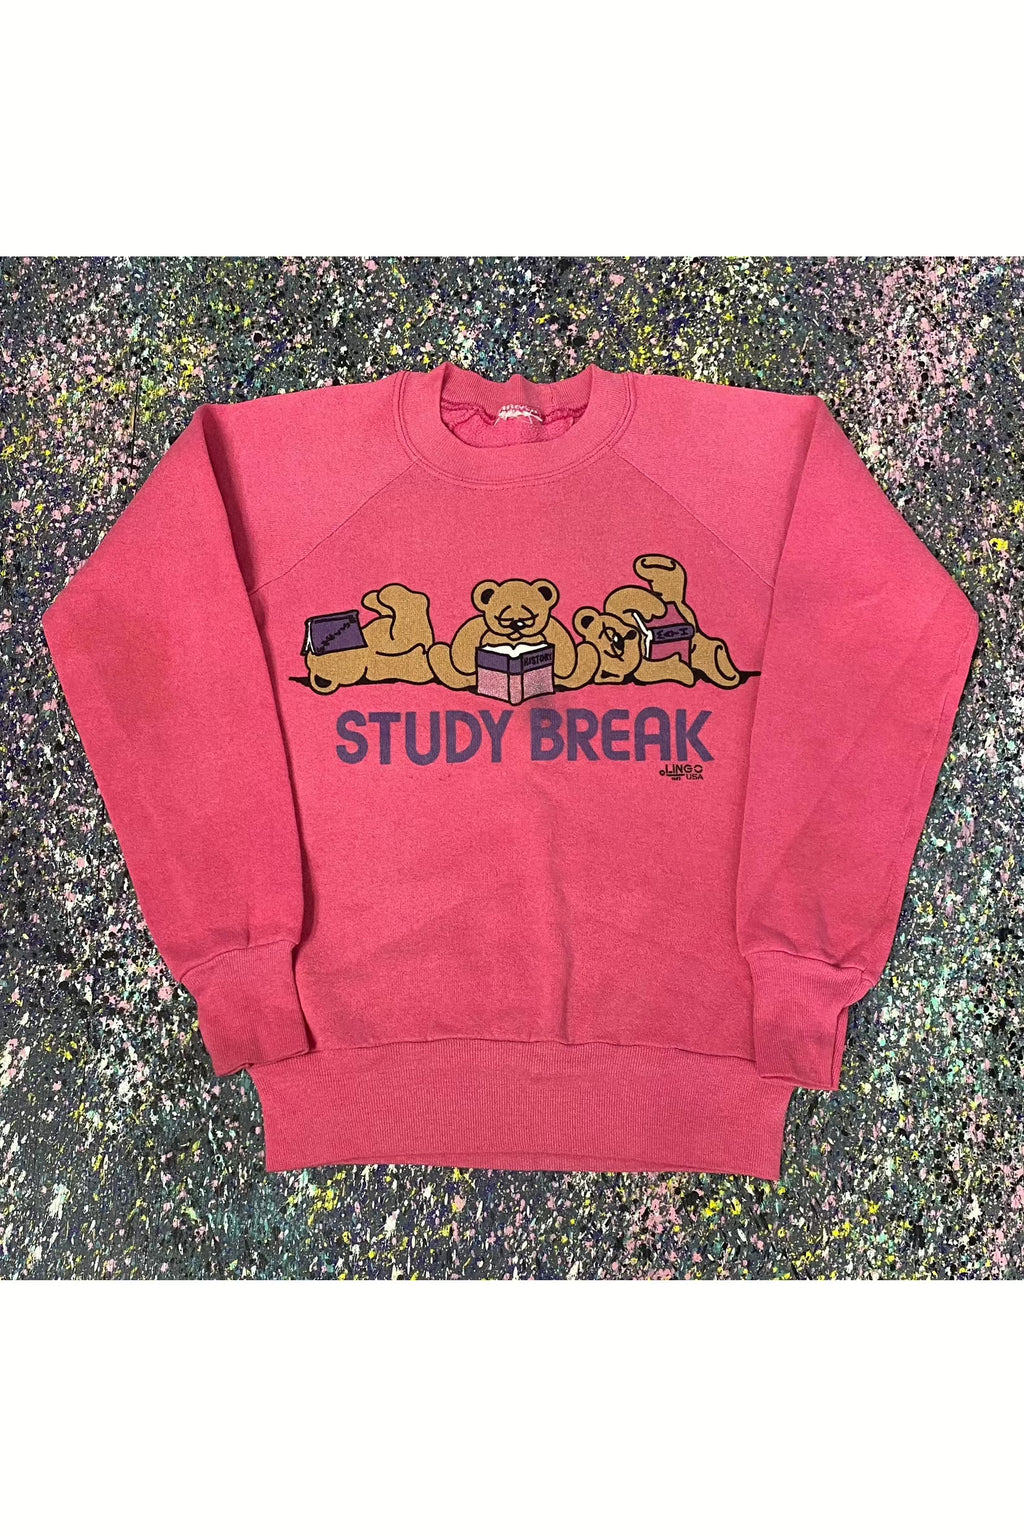 Vintage 1985 Lingo USA Study Break Youth Crewneck- YTH M (8-10)